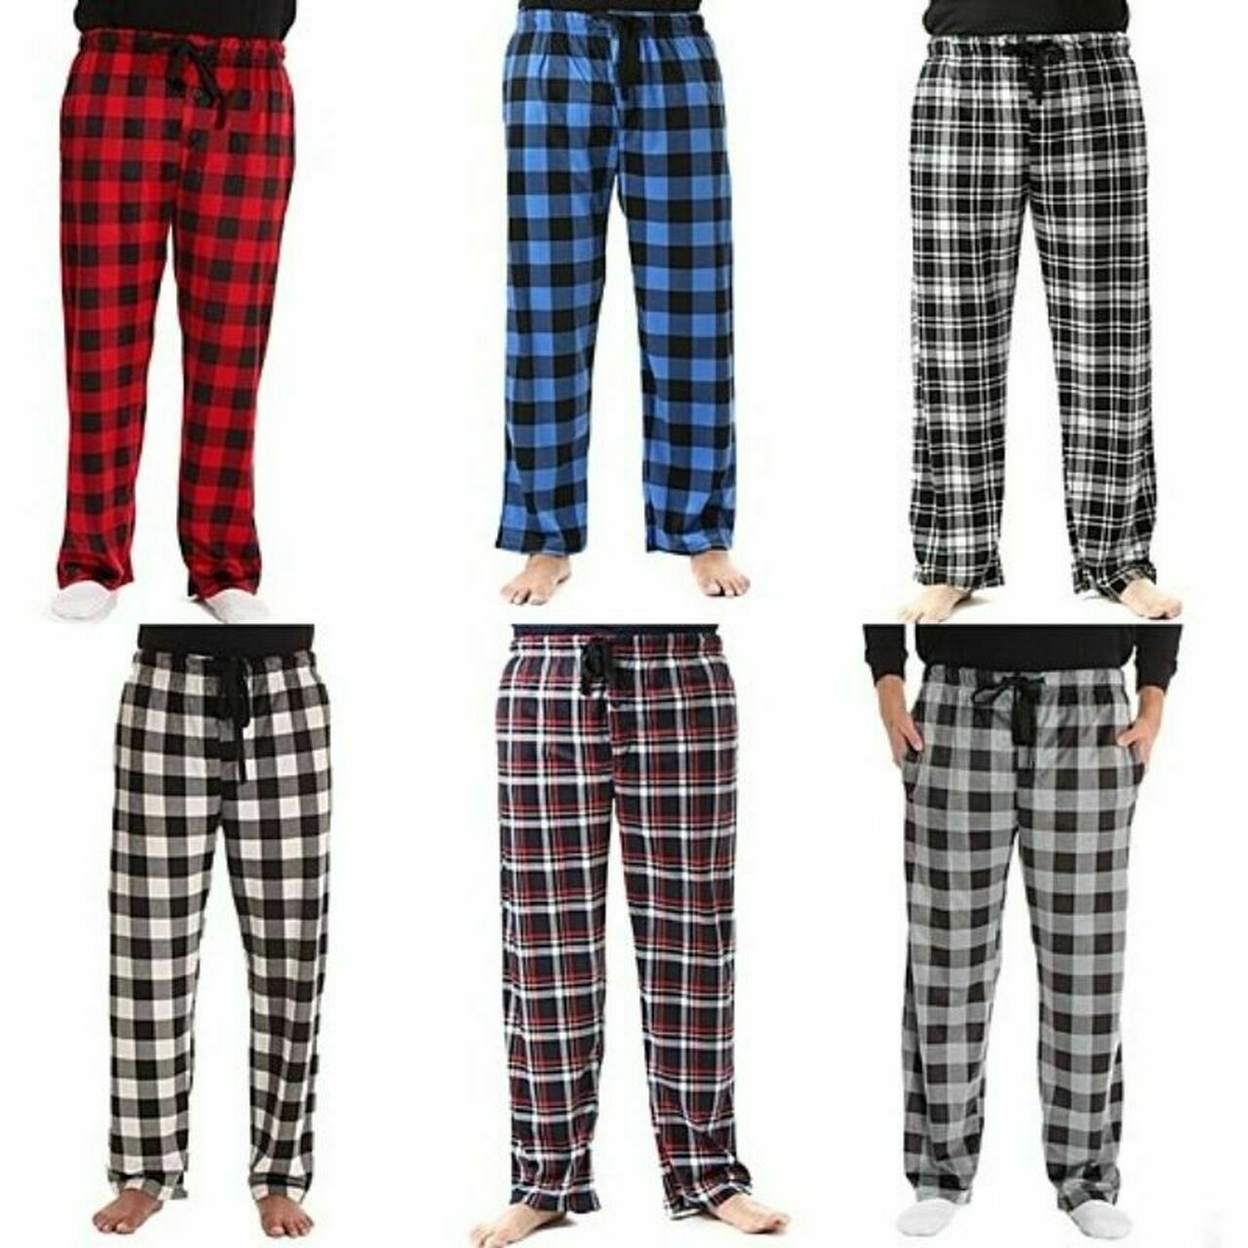 2-Pack: Men's Ultra Soft Cozy Flannel Fleece Plaid Pajama Sleep Bottom Lounge Pants - Black & Grey, Small